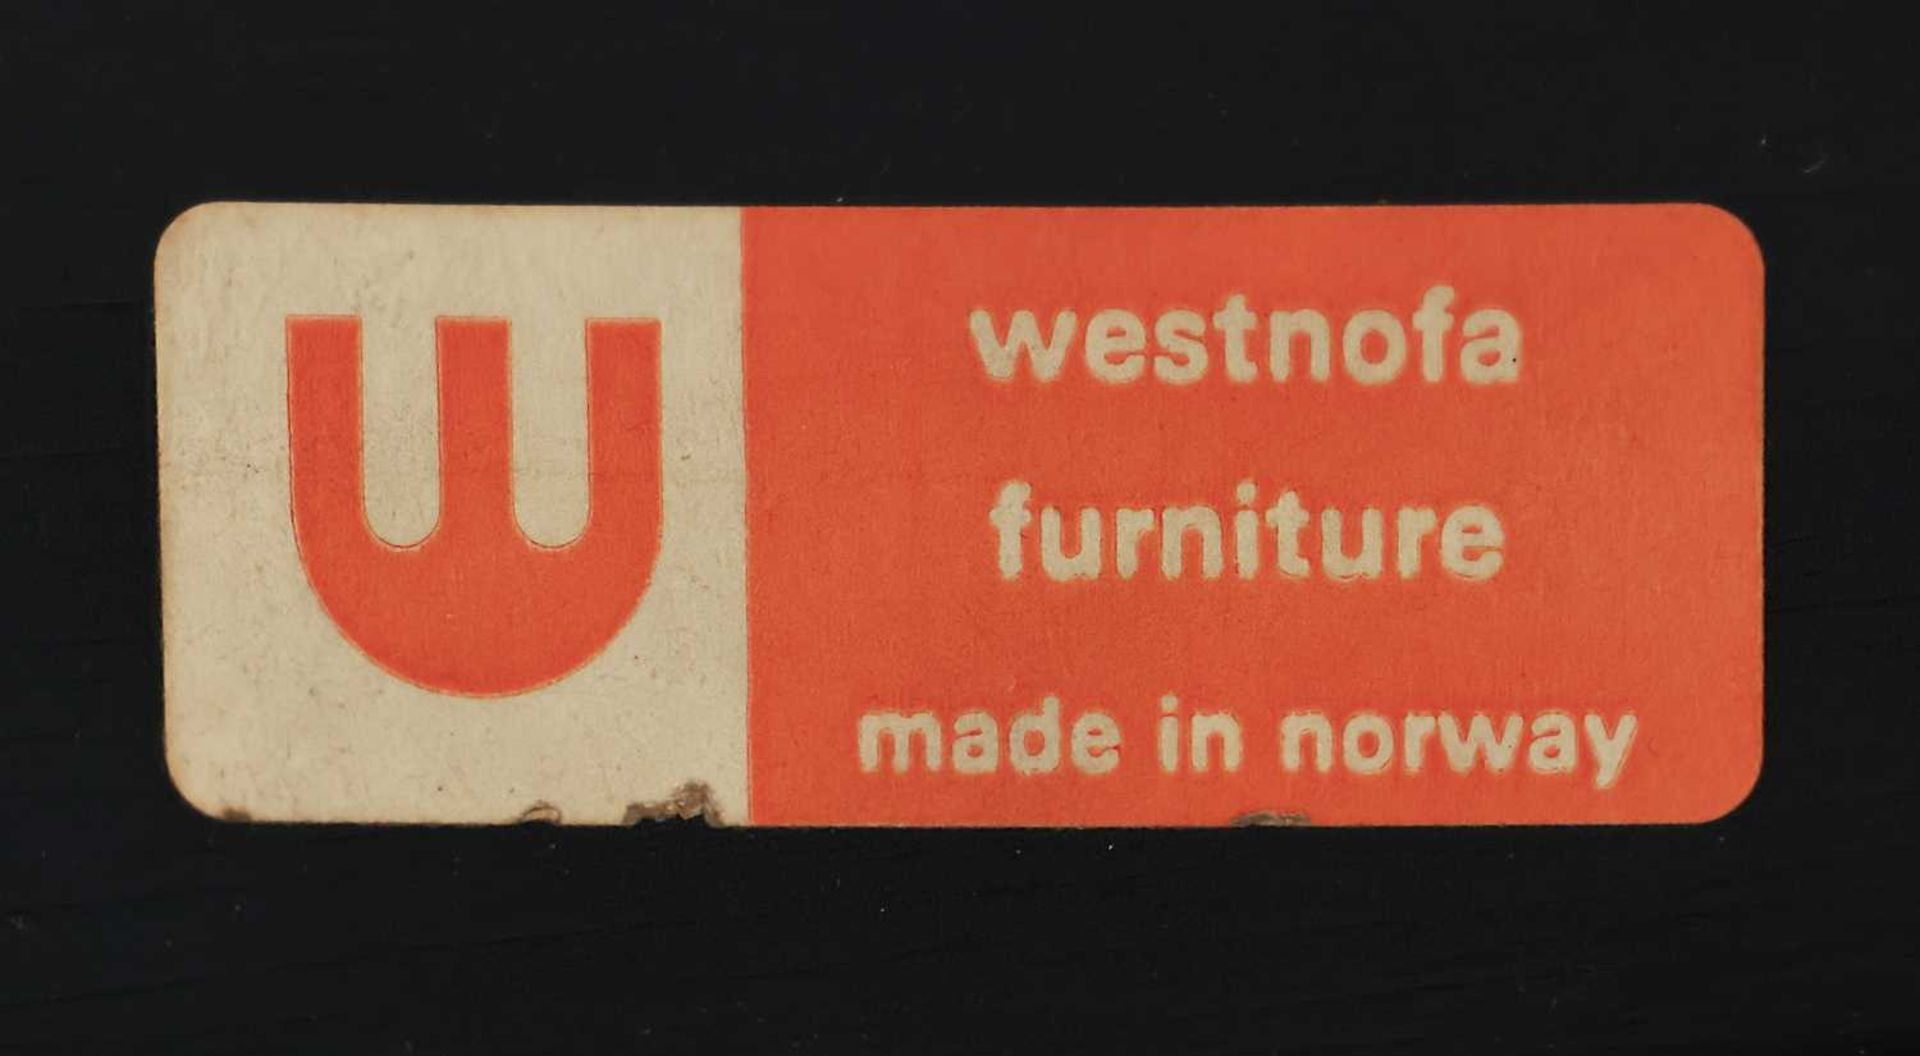 2 WESTNOFA (Norwegen) "Siesta" Lounge Sessel mit 1 Ottoman - Image 3 of 3